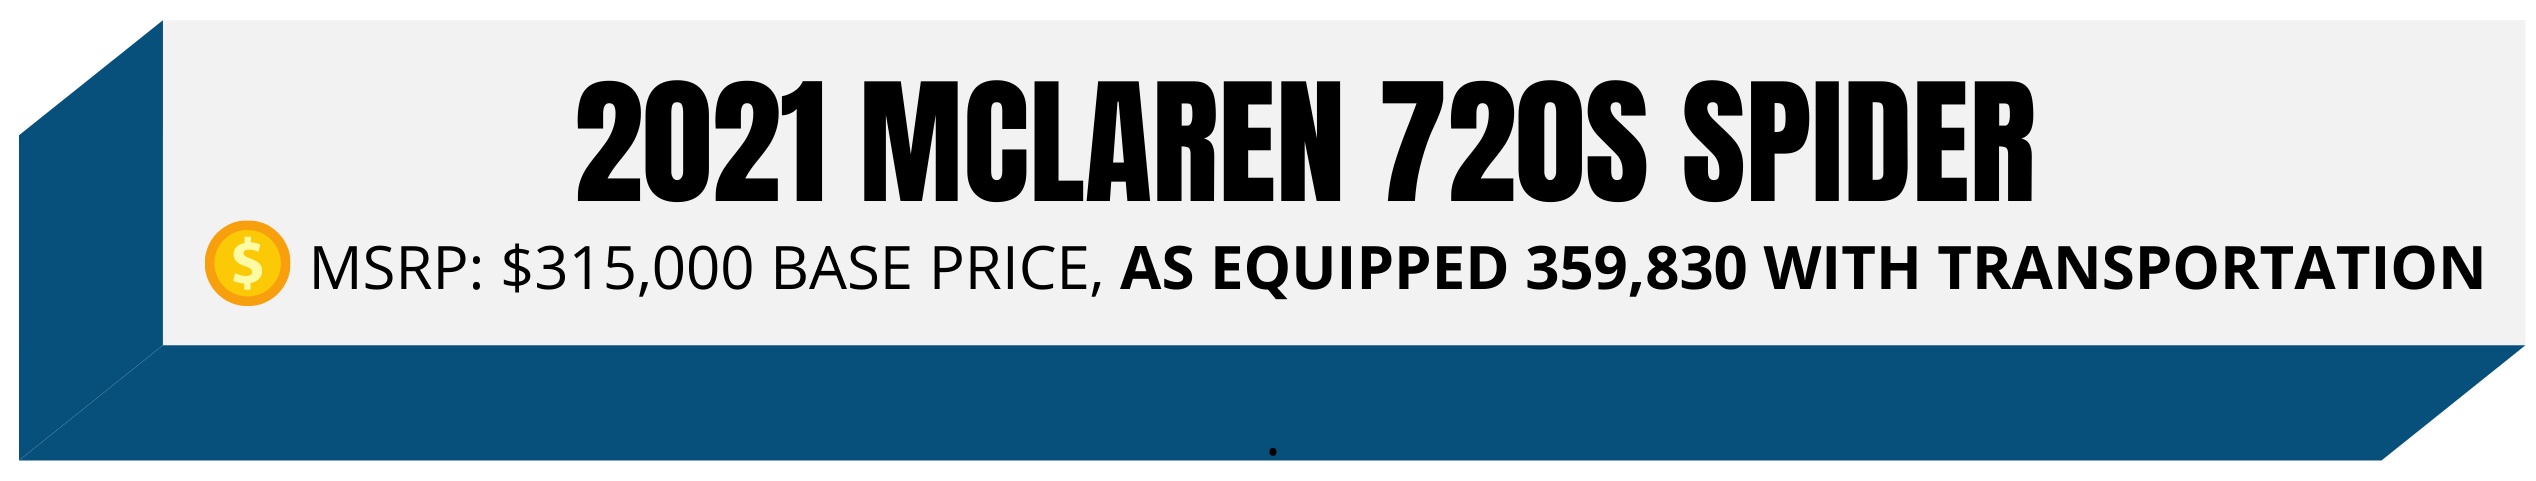 mclaren-720s-graphic